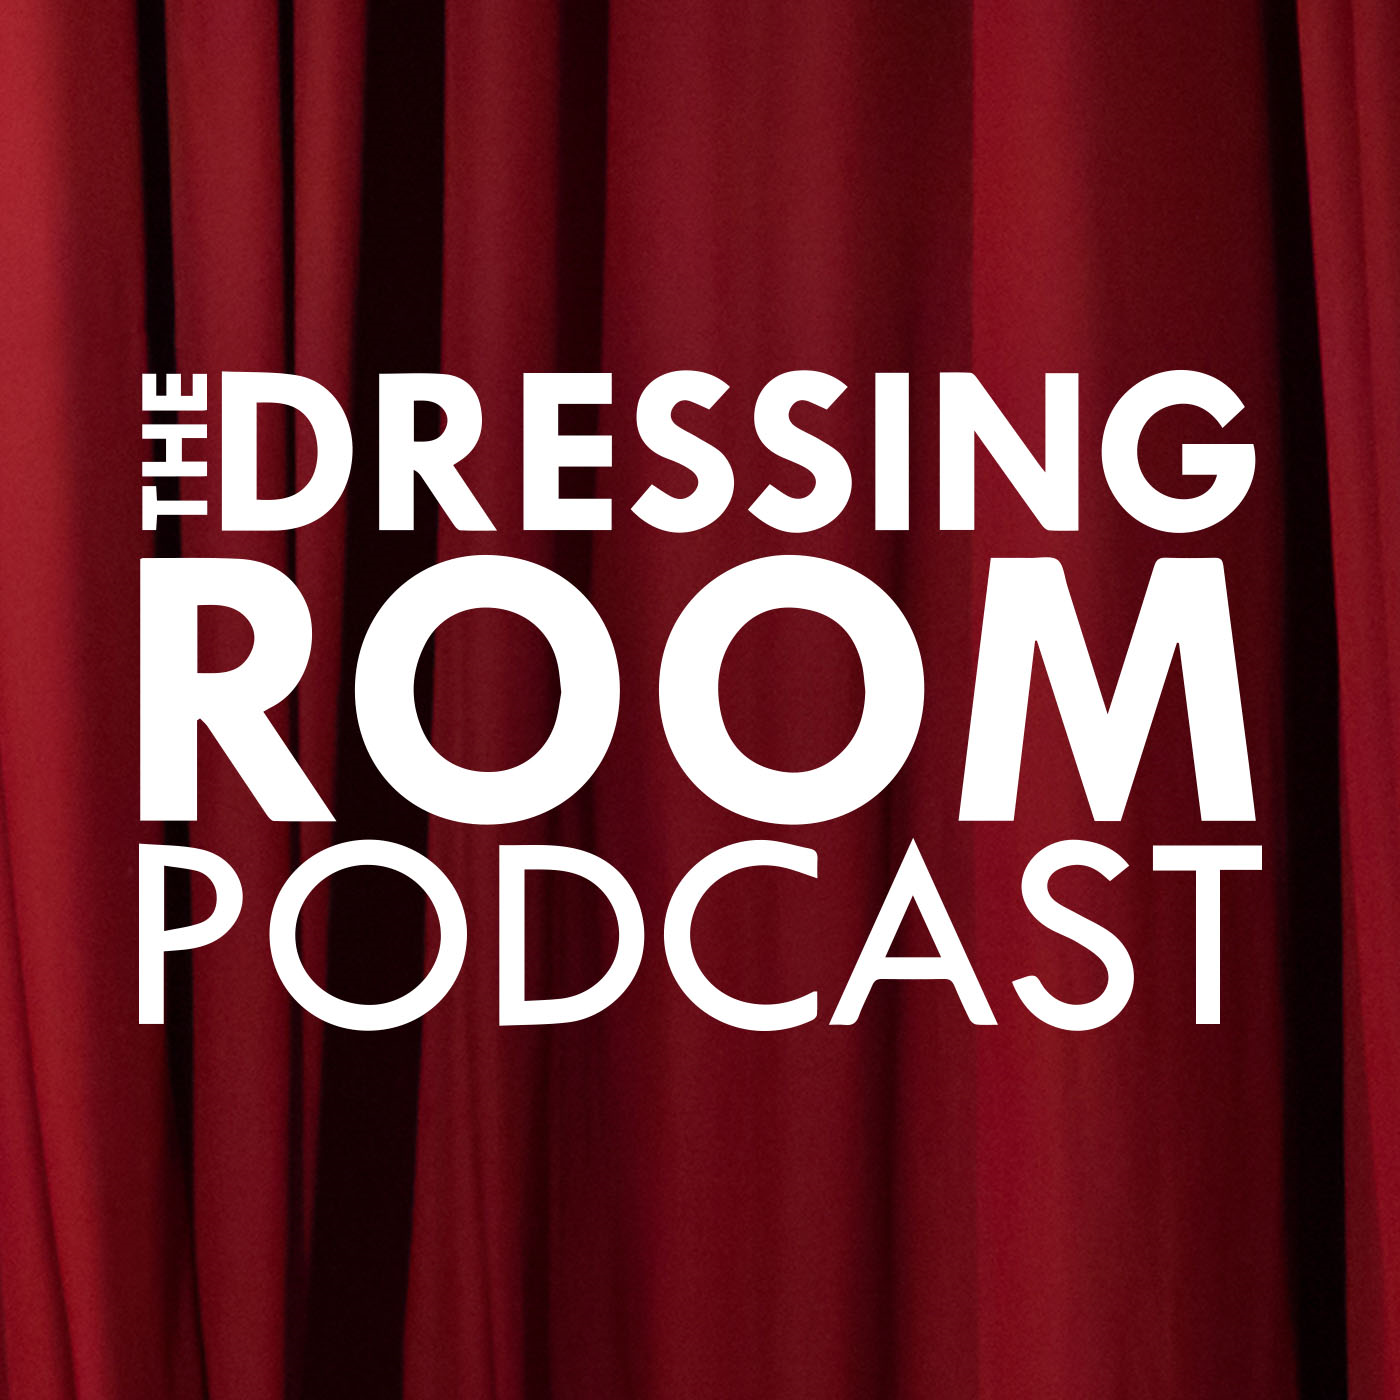 THE DRESSING ROOM PODCAST - EPISODE 8 - PRISCILLA'S EUAN DOIDGE